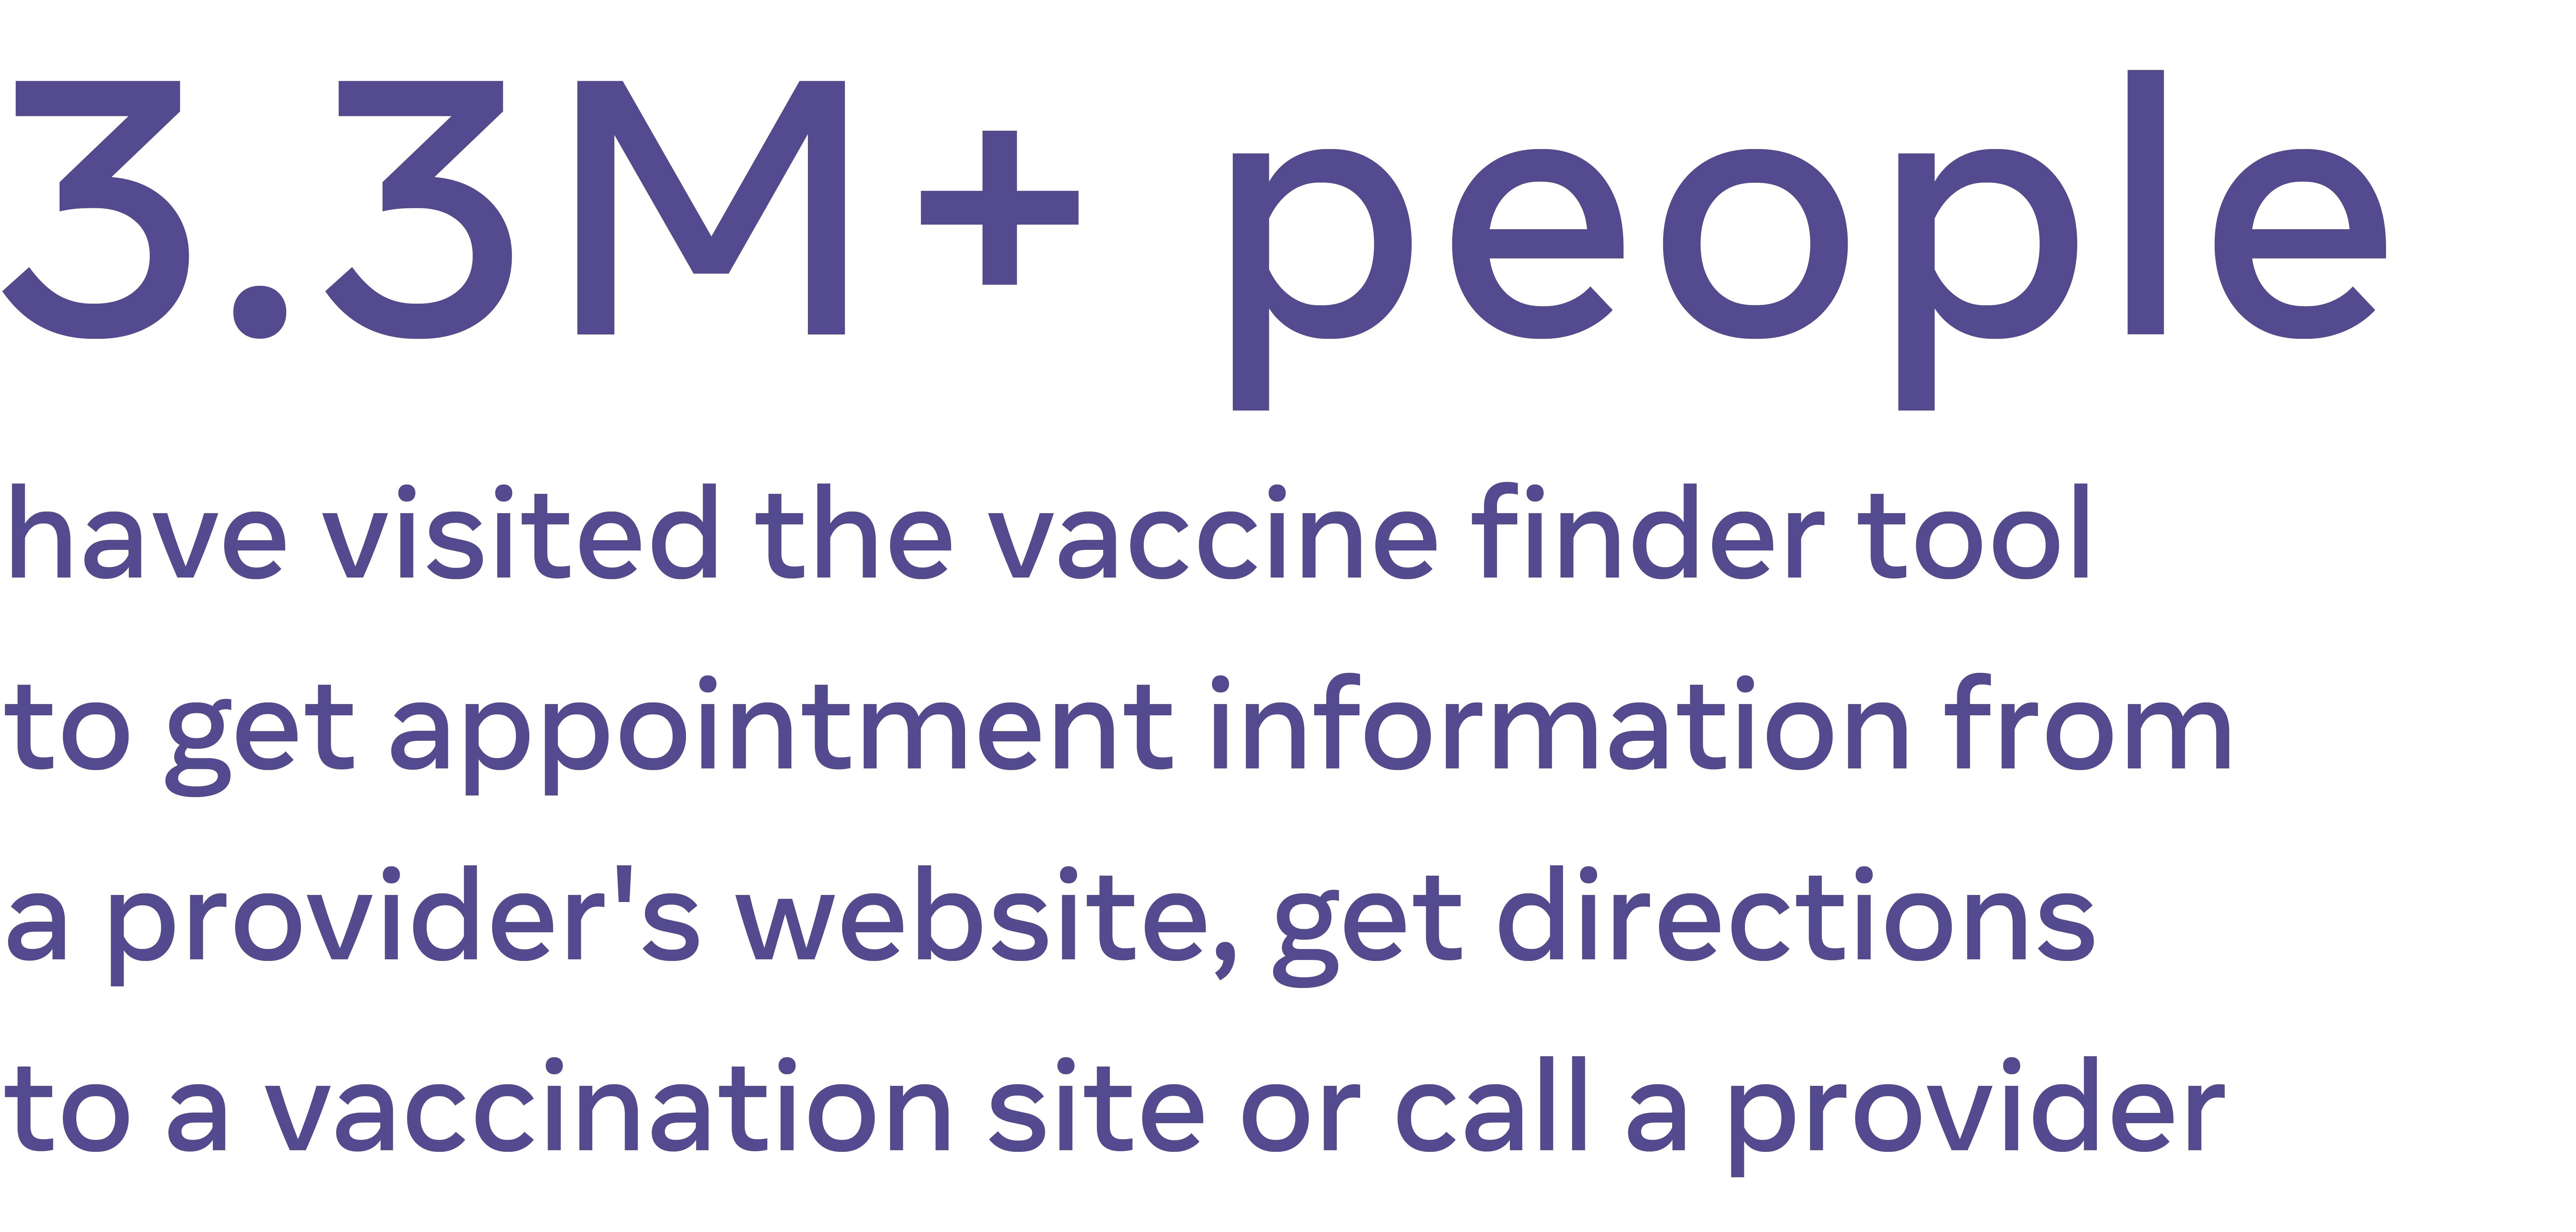 Vaccine finder tool stat graphic